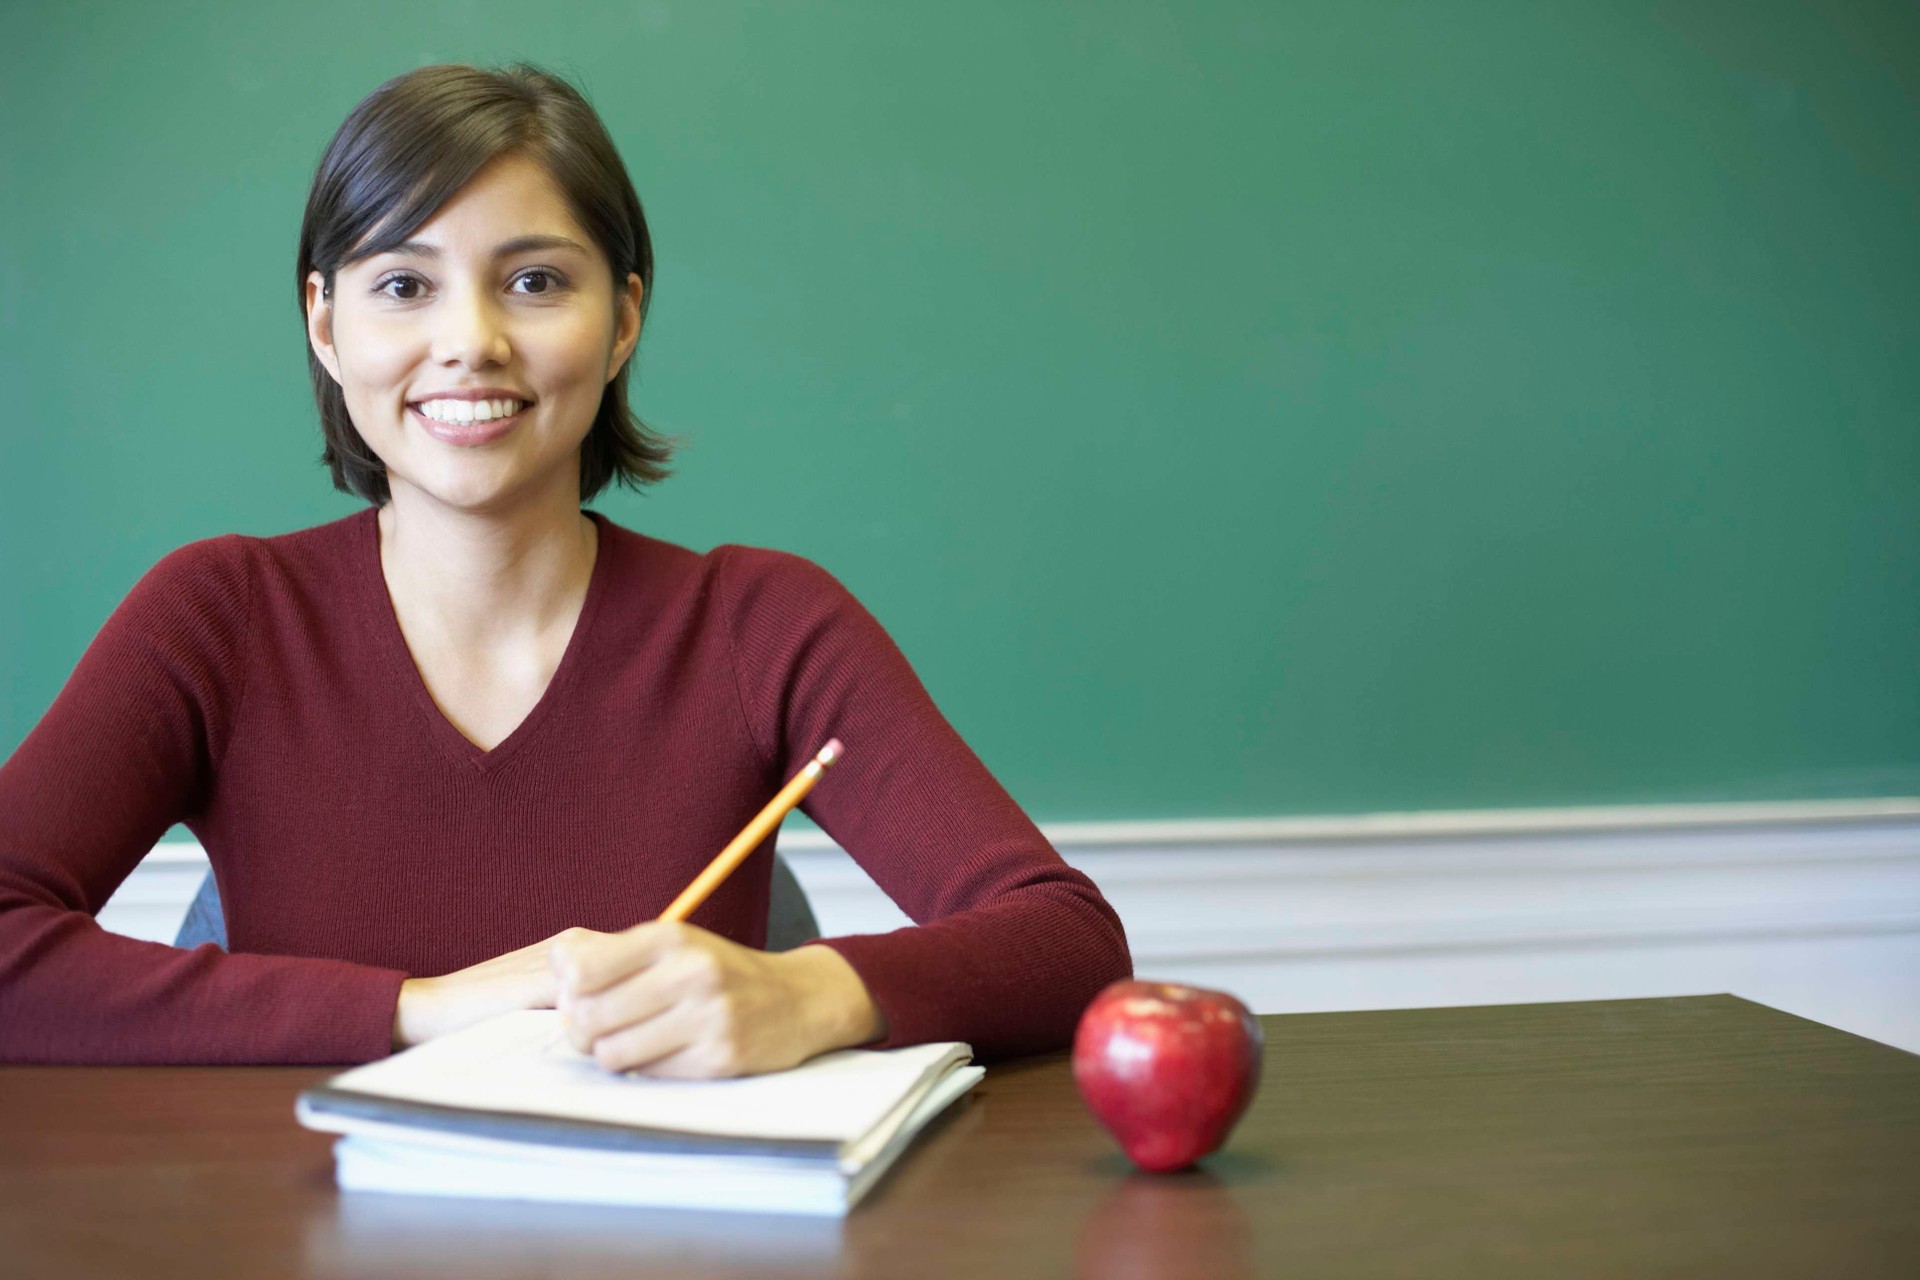 Smiling teacher in front of green chalkboard